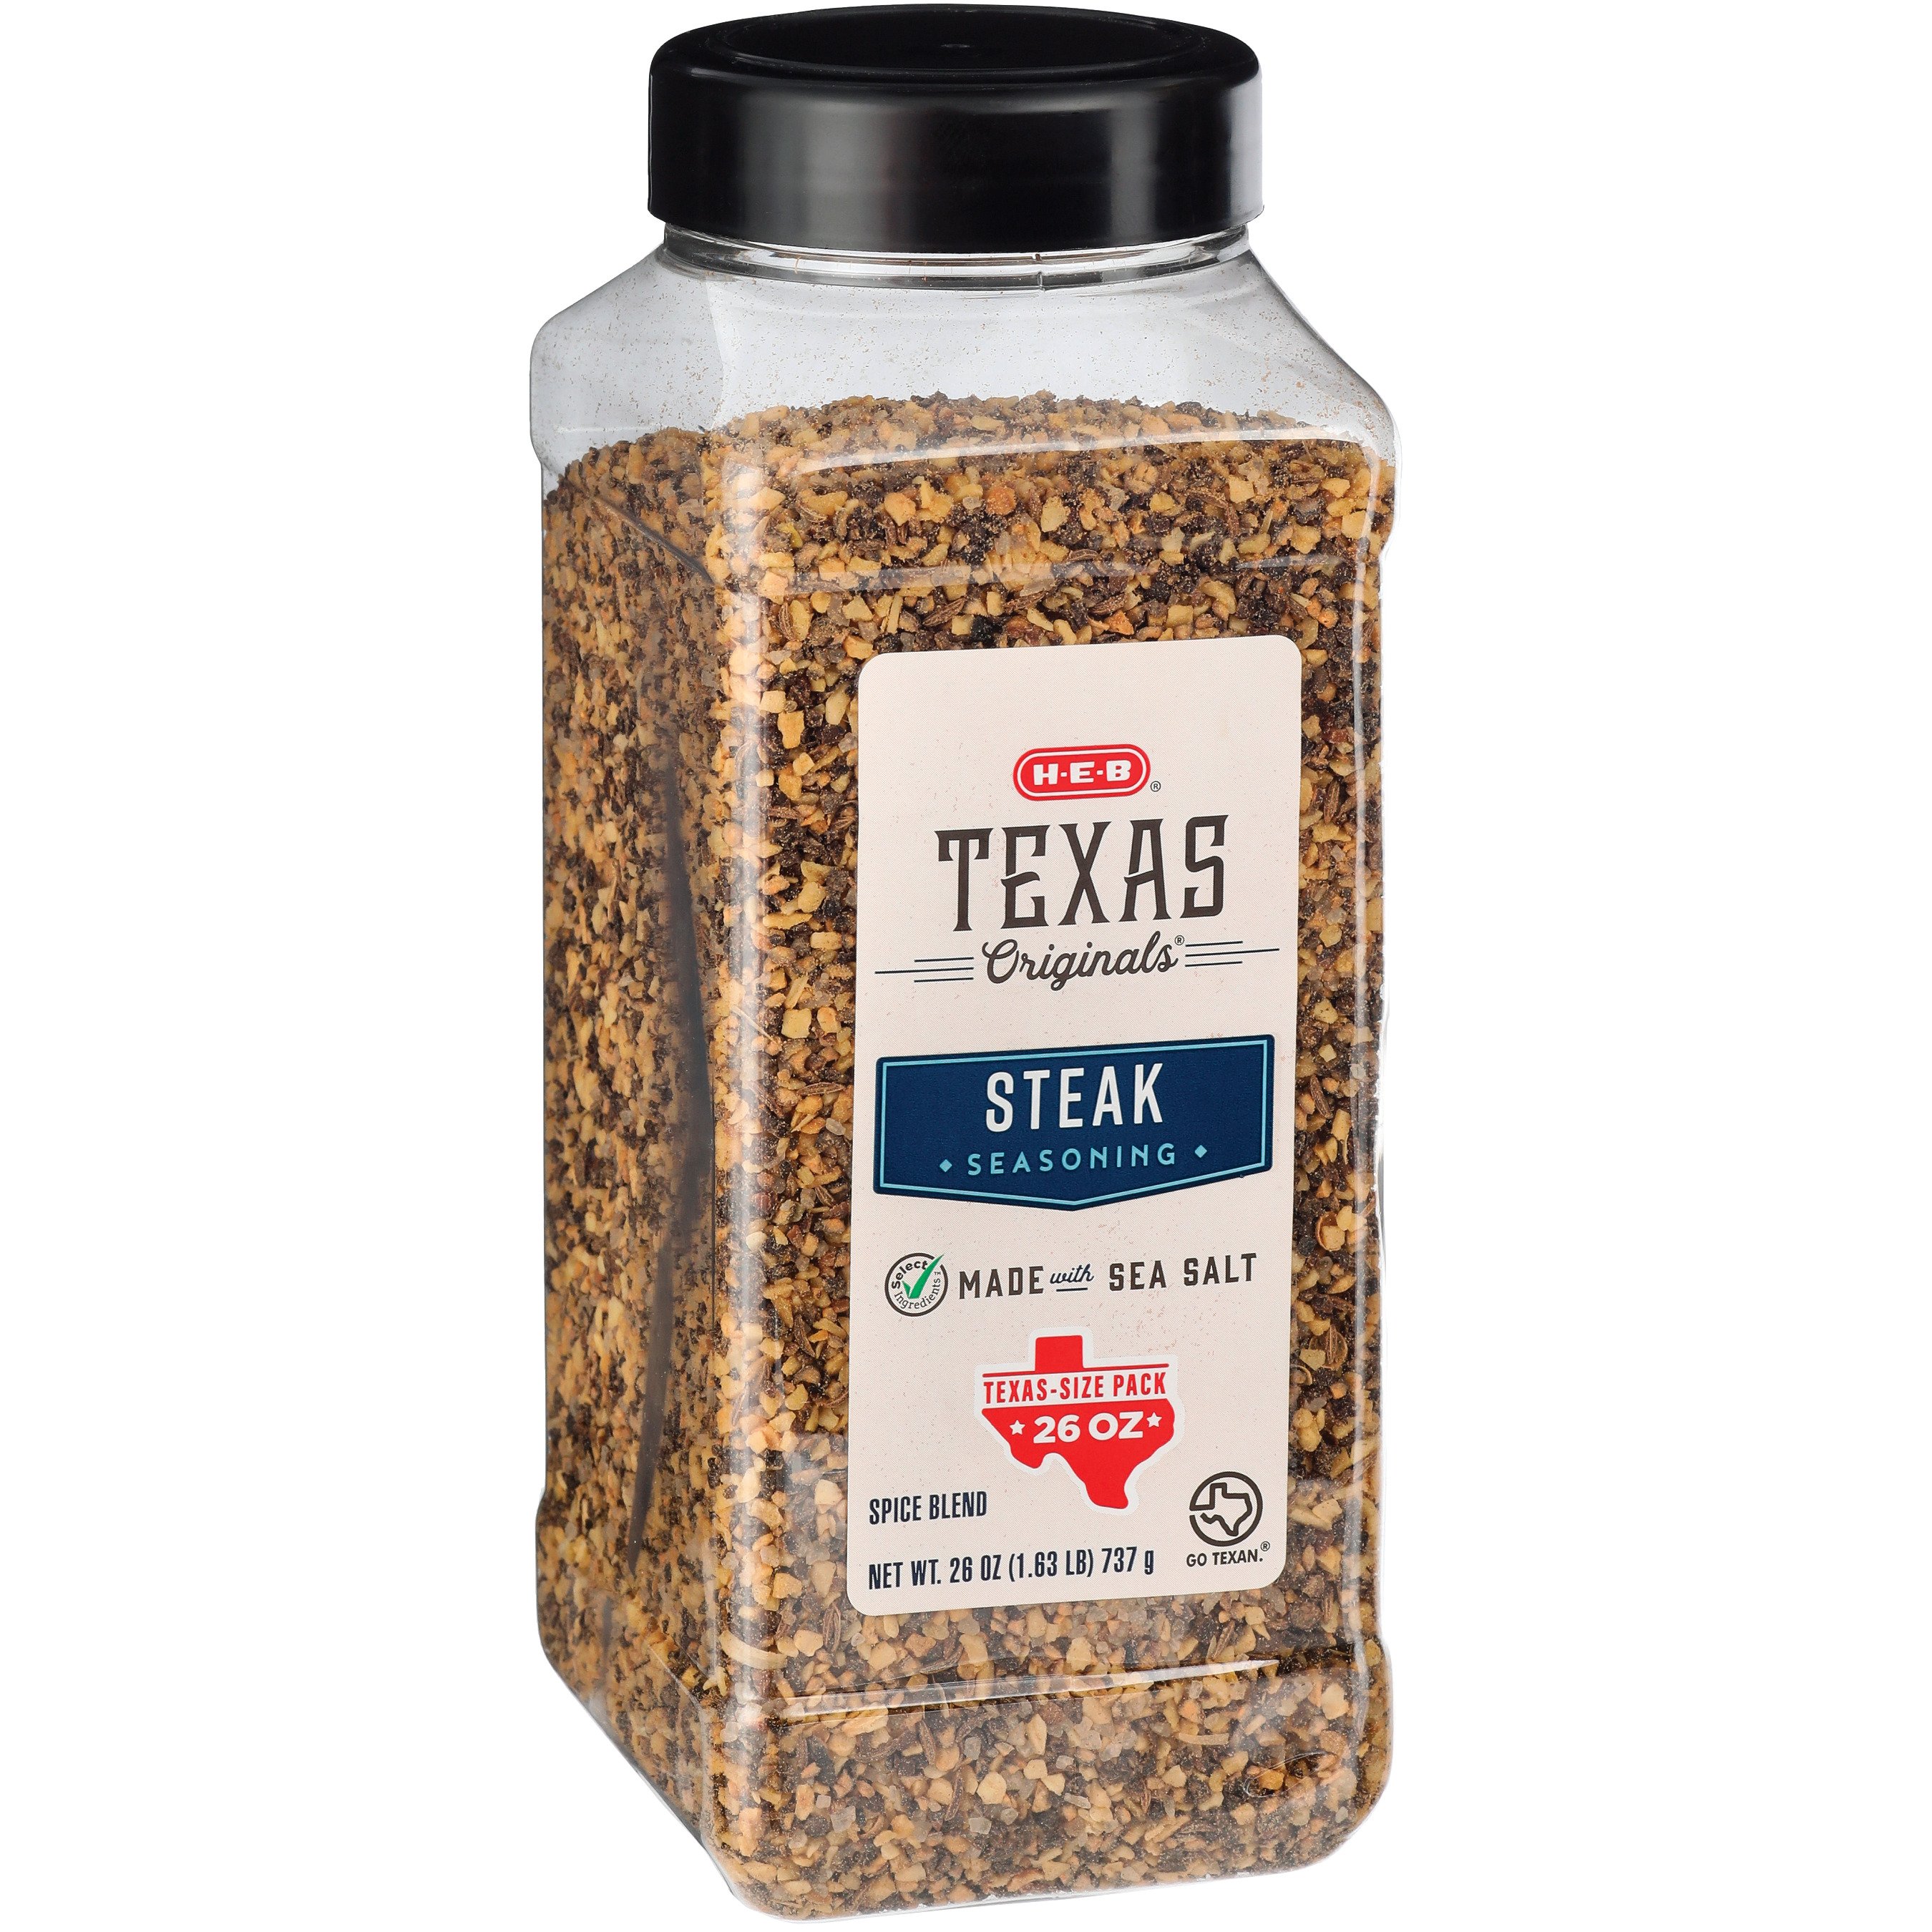 H-E-B Texas Originals Steak Seasoning Spice Blend - Texas-Size